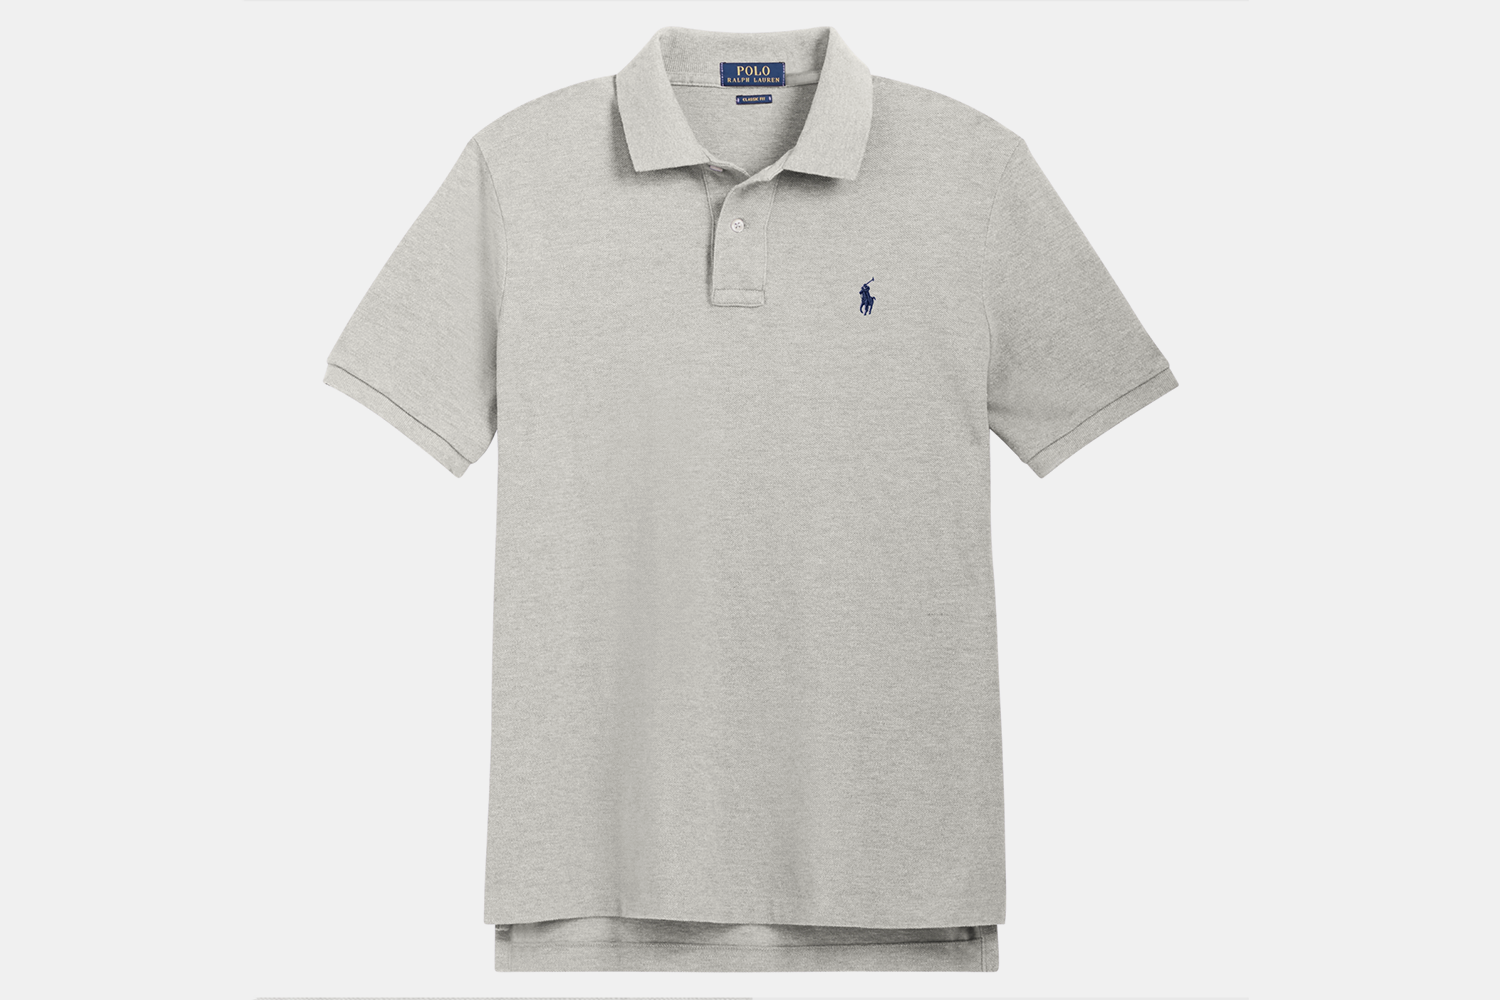 Polo Ralph Lauren Brand Logo With Name White Symbol Clothes Design